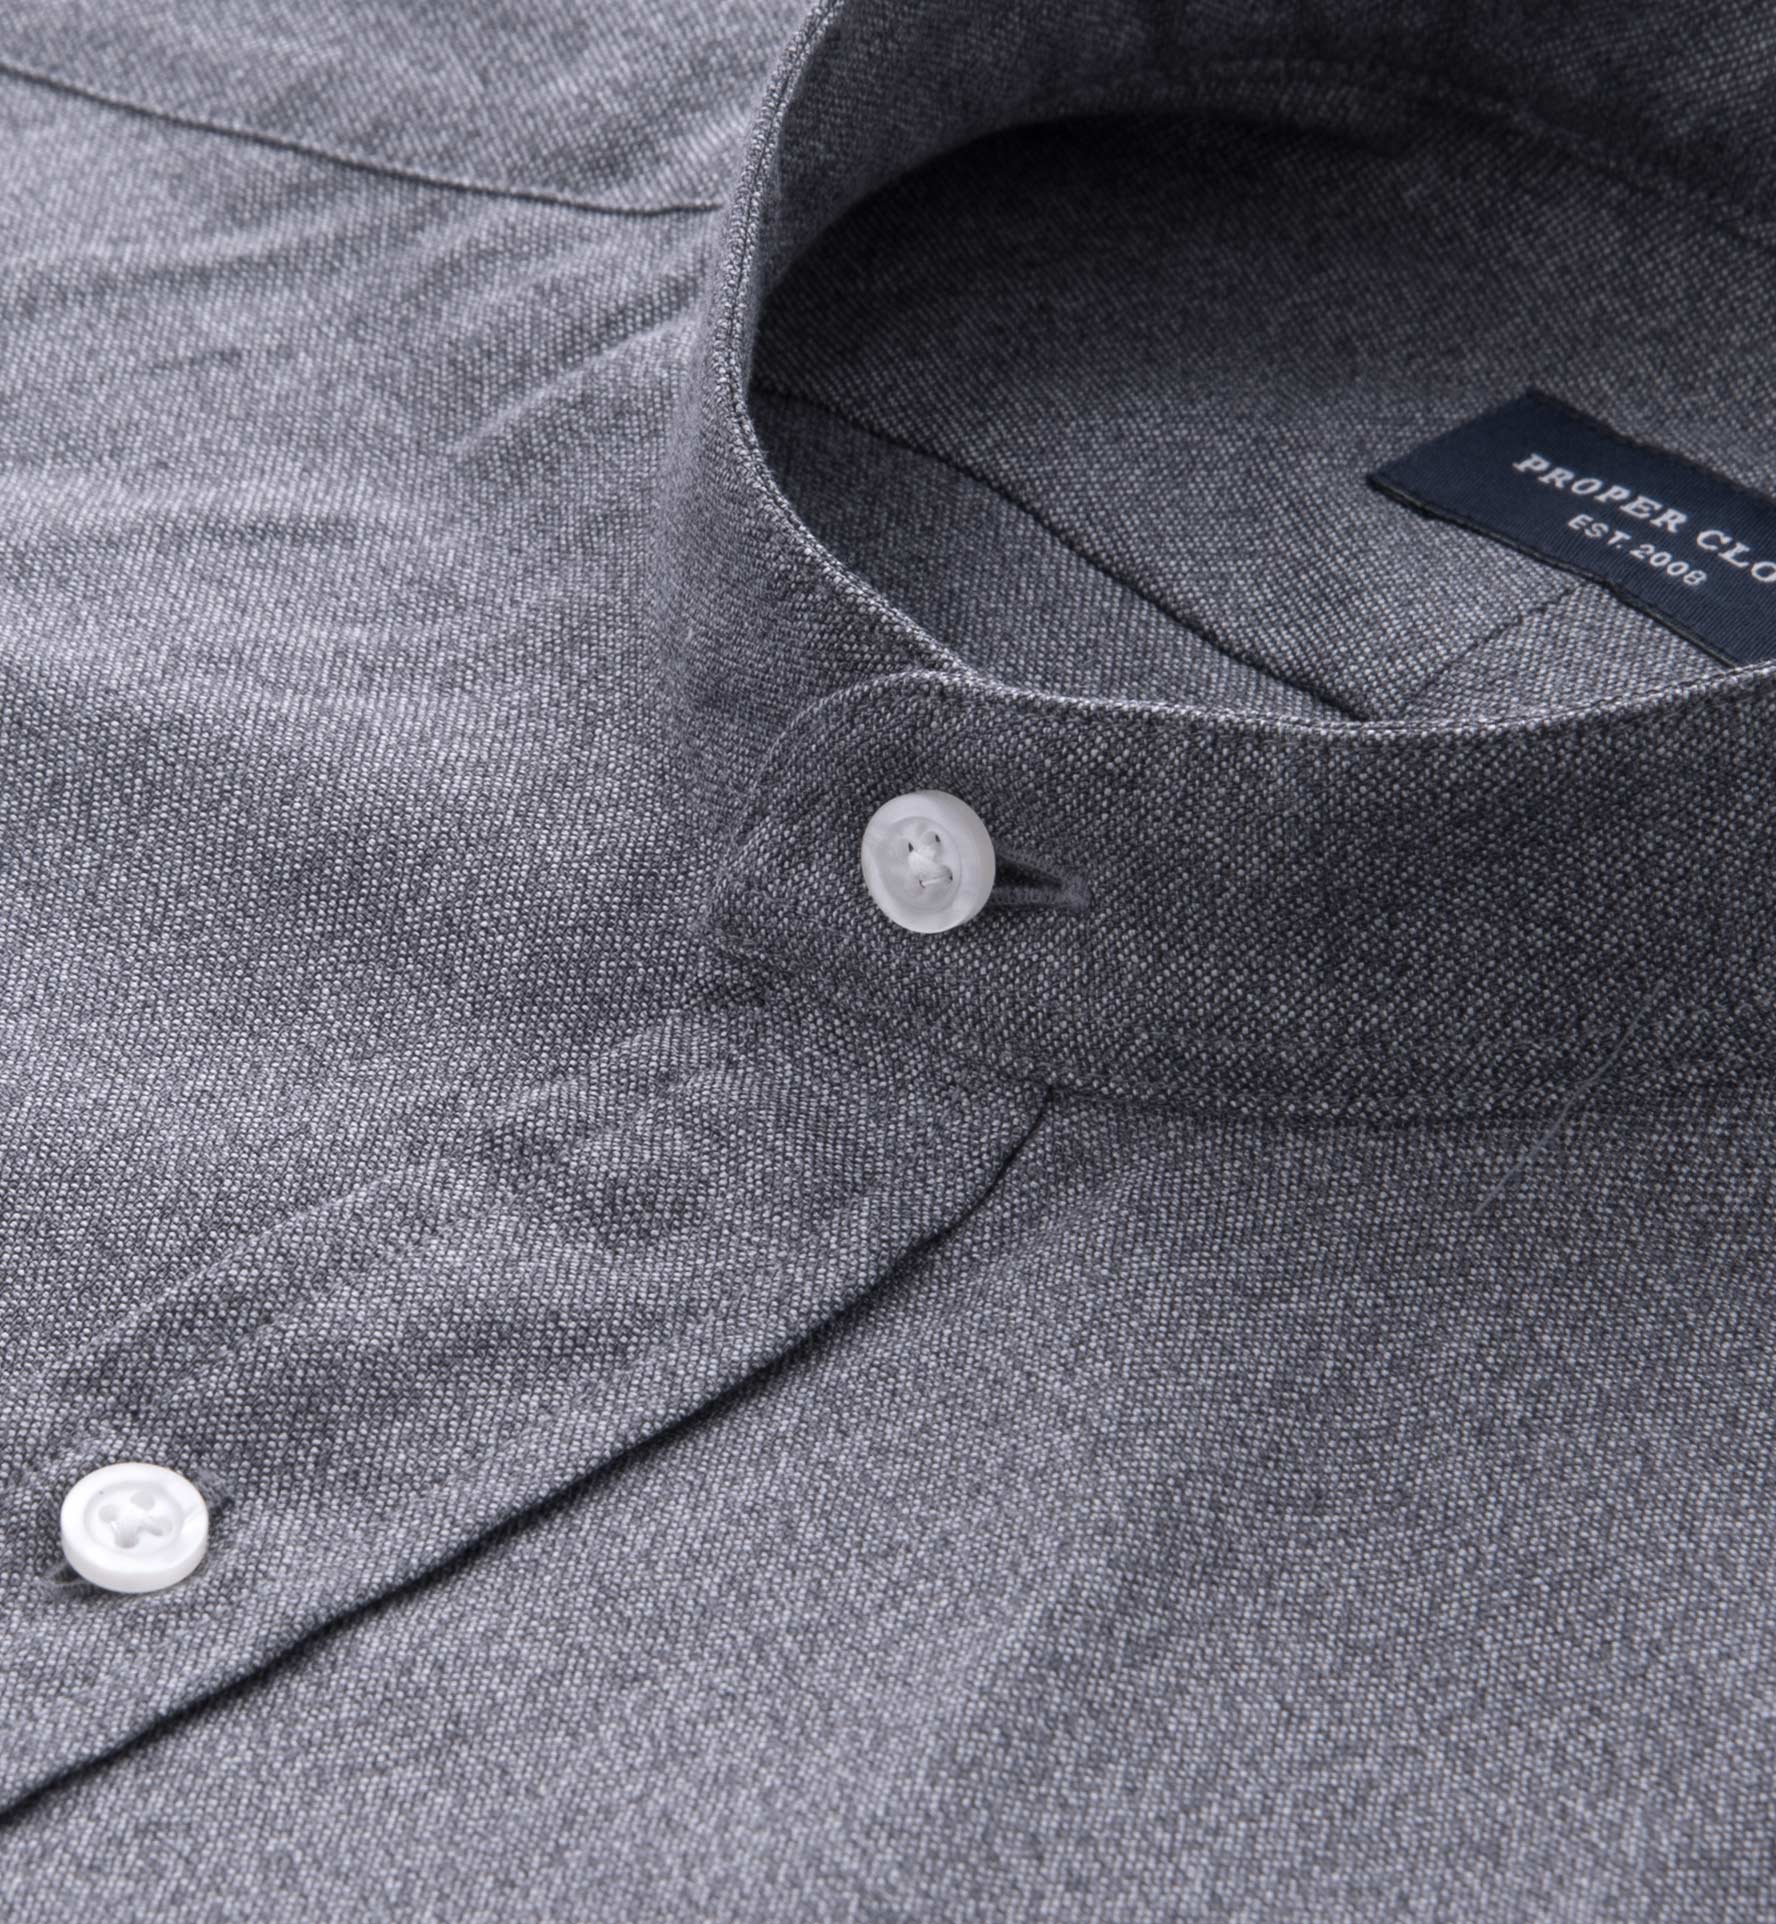 Albini Charcoal Melange Oxford Custom Made Shirt by Proper Cloth